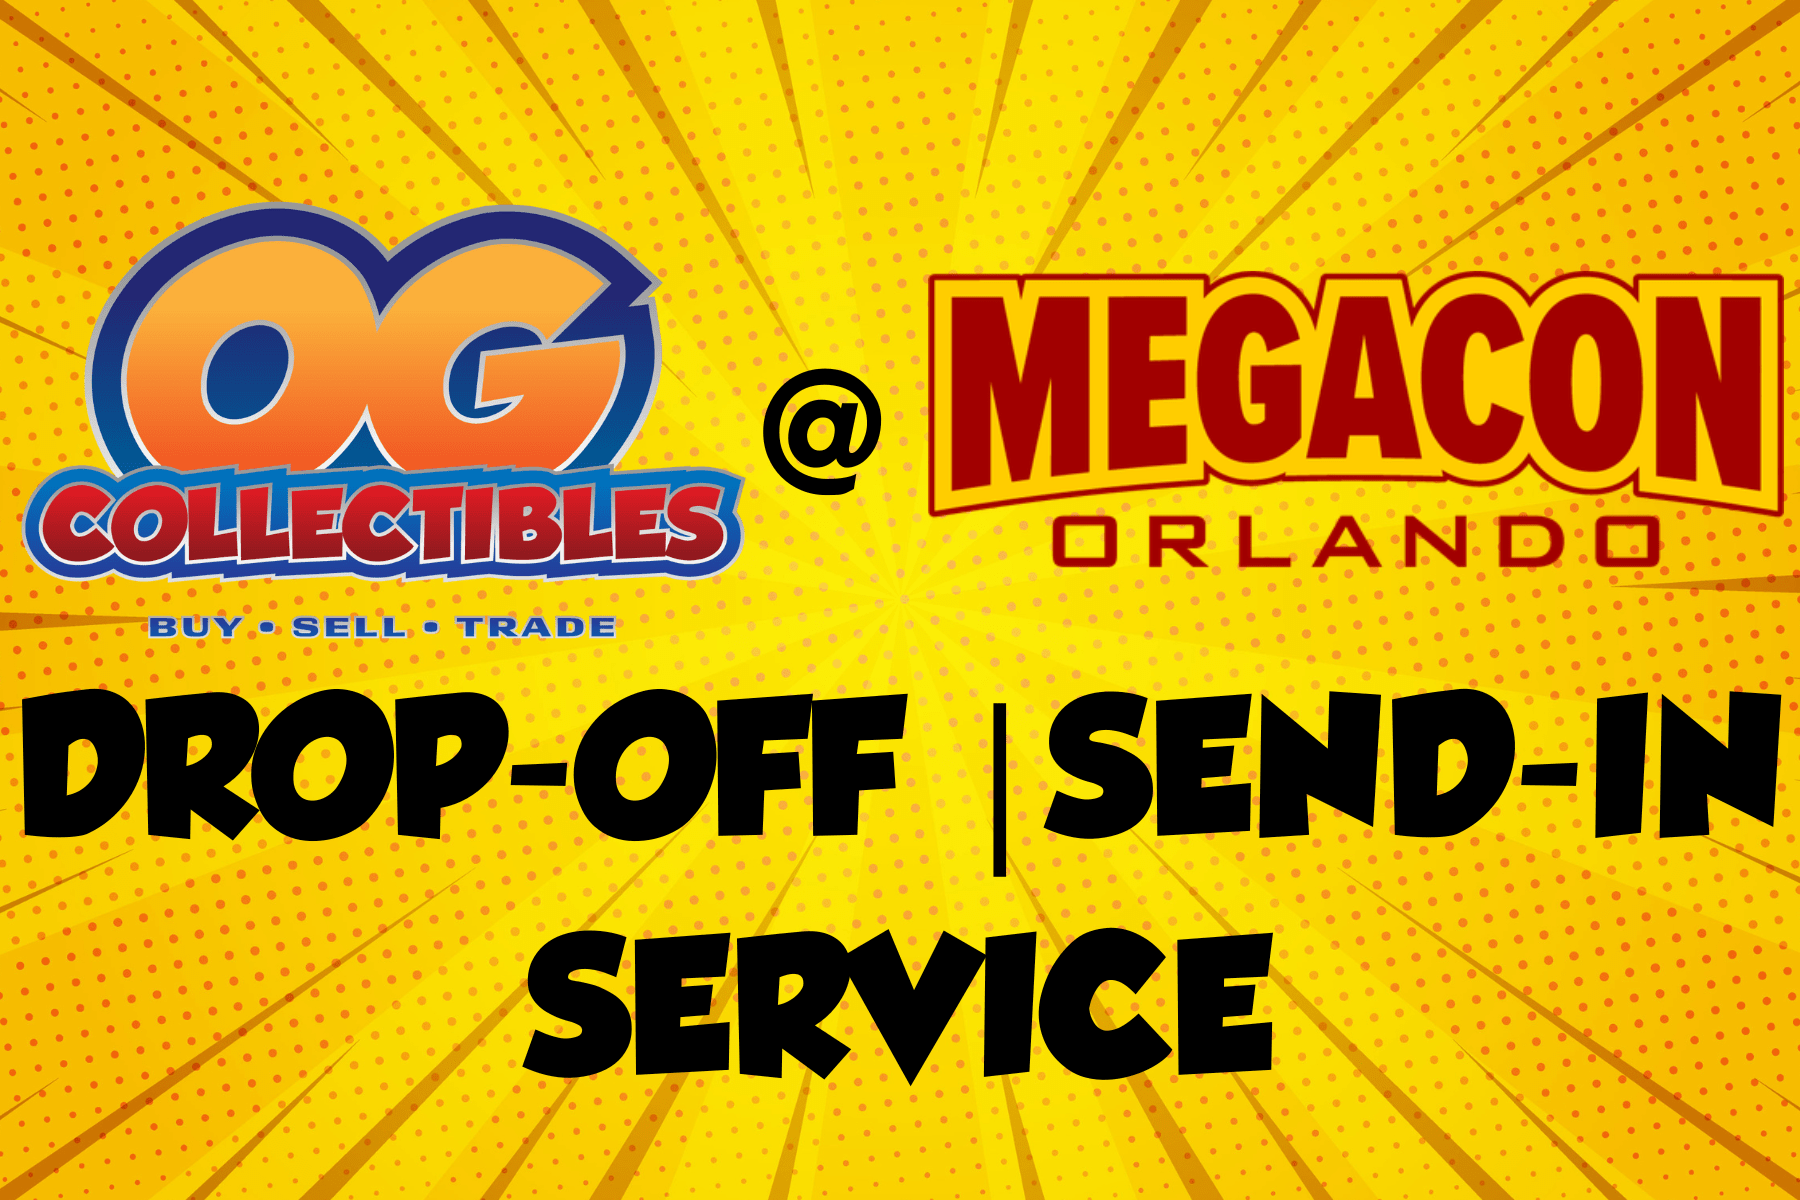 Stranger Things' stars added to MegaCon Orlando lineup